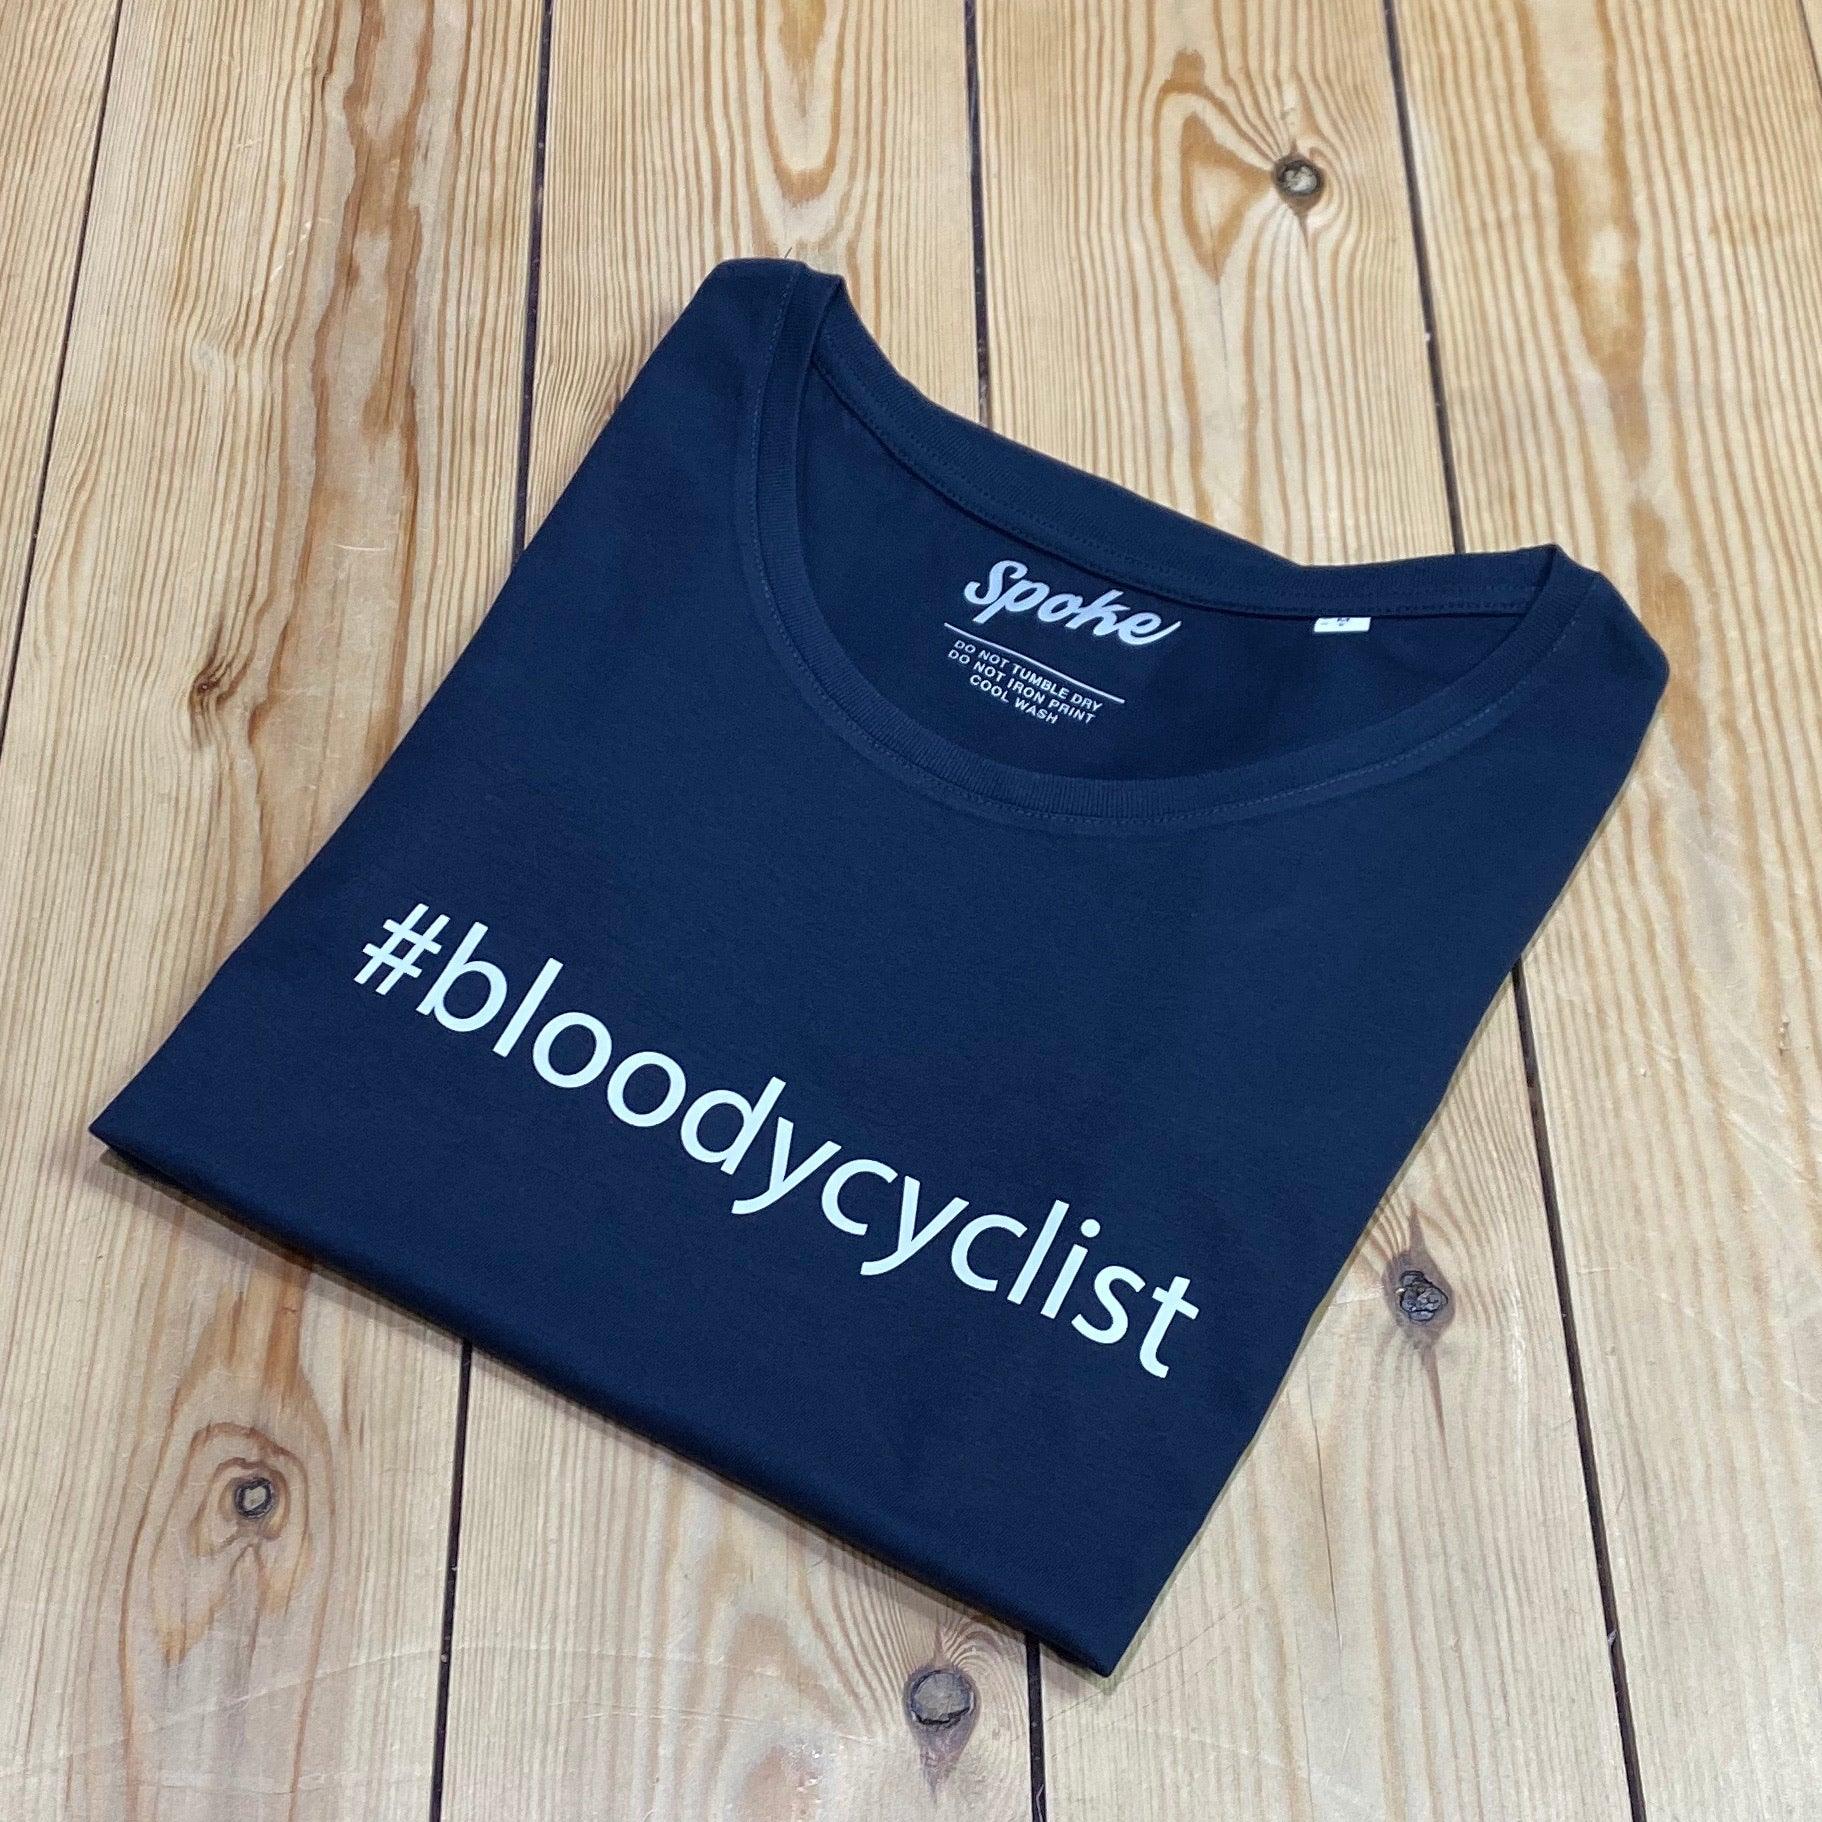 Women's BloodyCyclist T-Shirt - Spoke & Solace